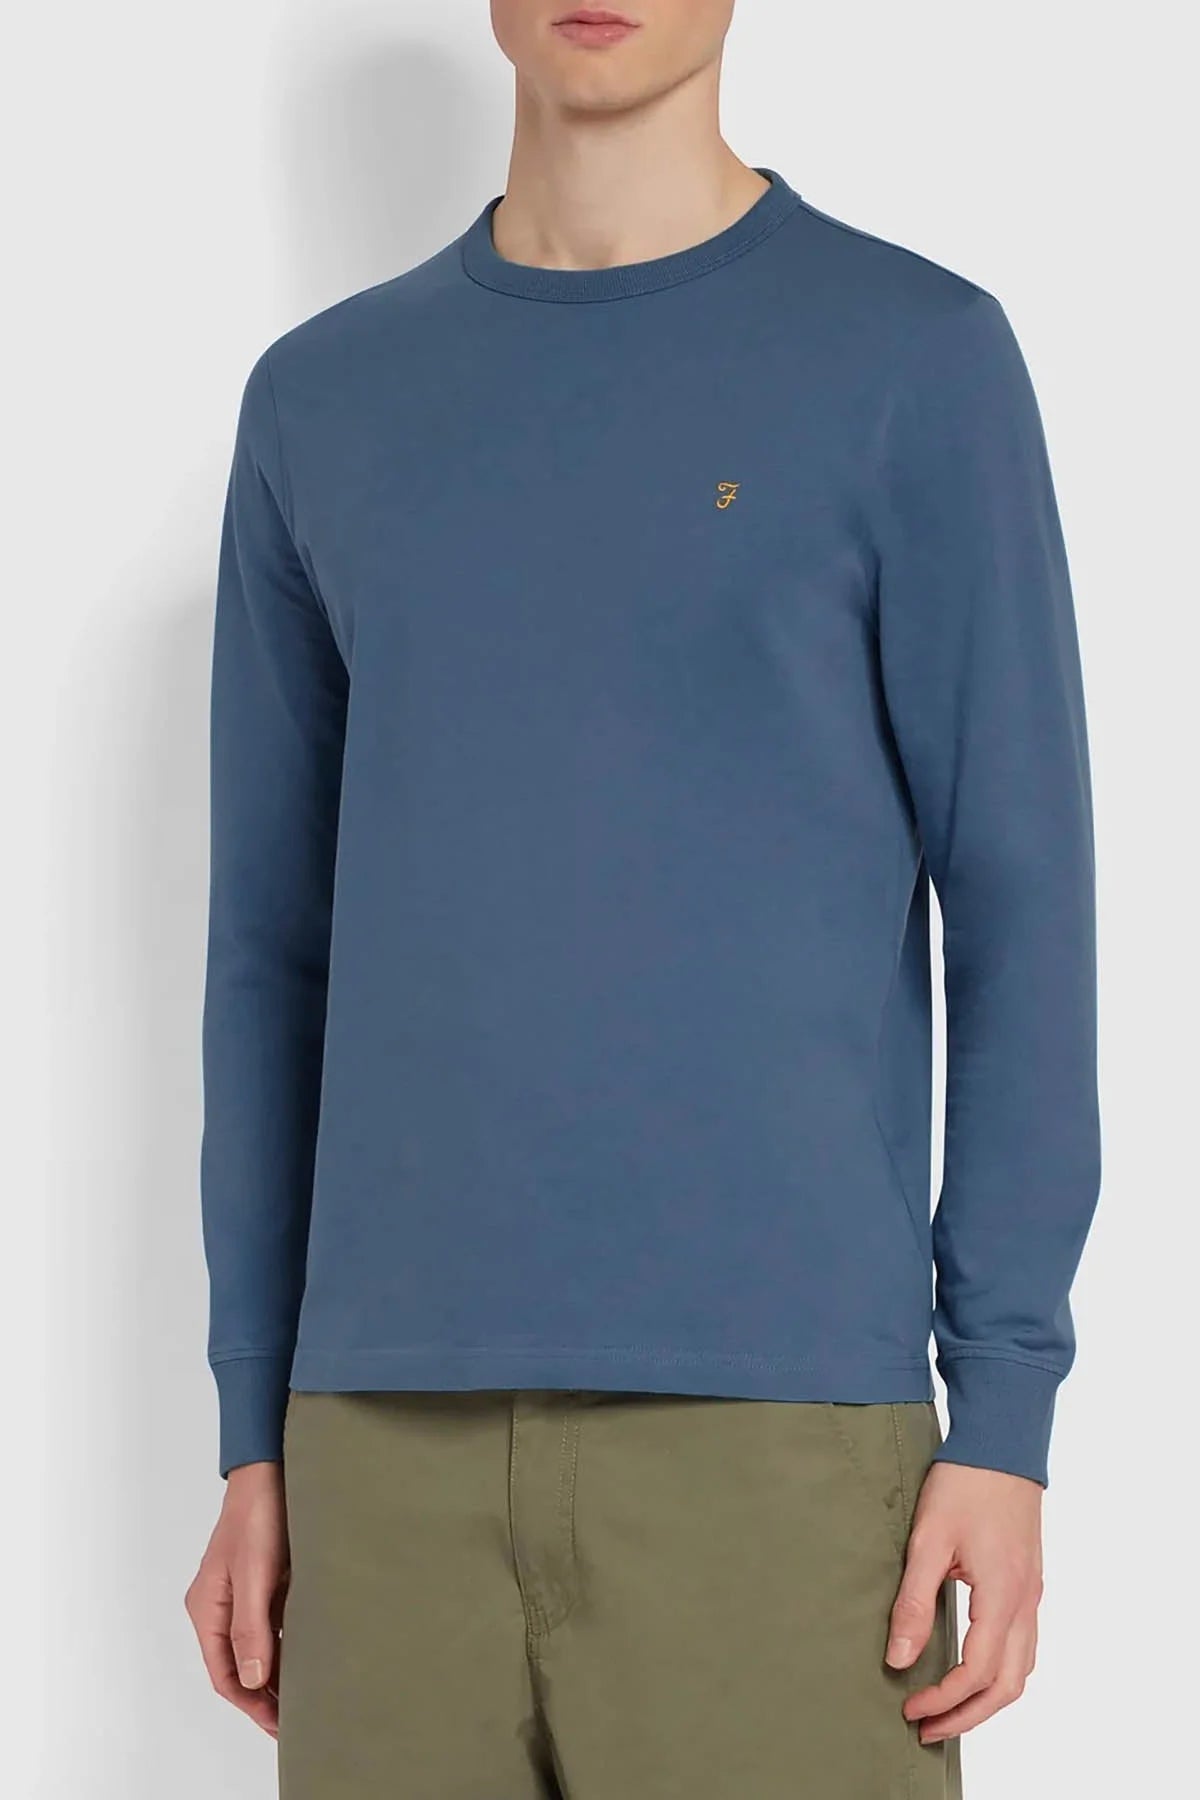 Farah Organic Cotton Long Sleeve T-Shirt Blue / XL